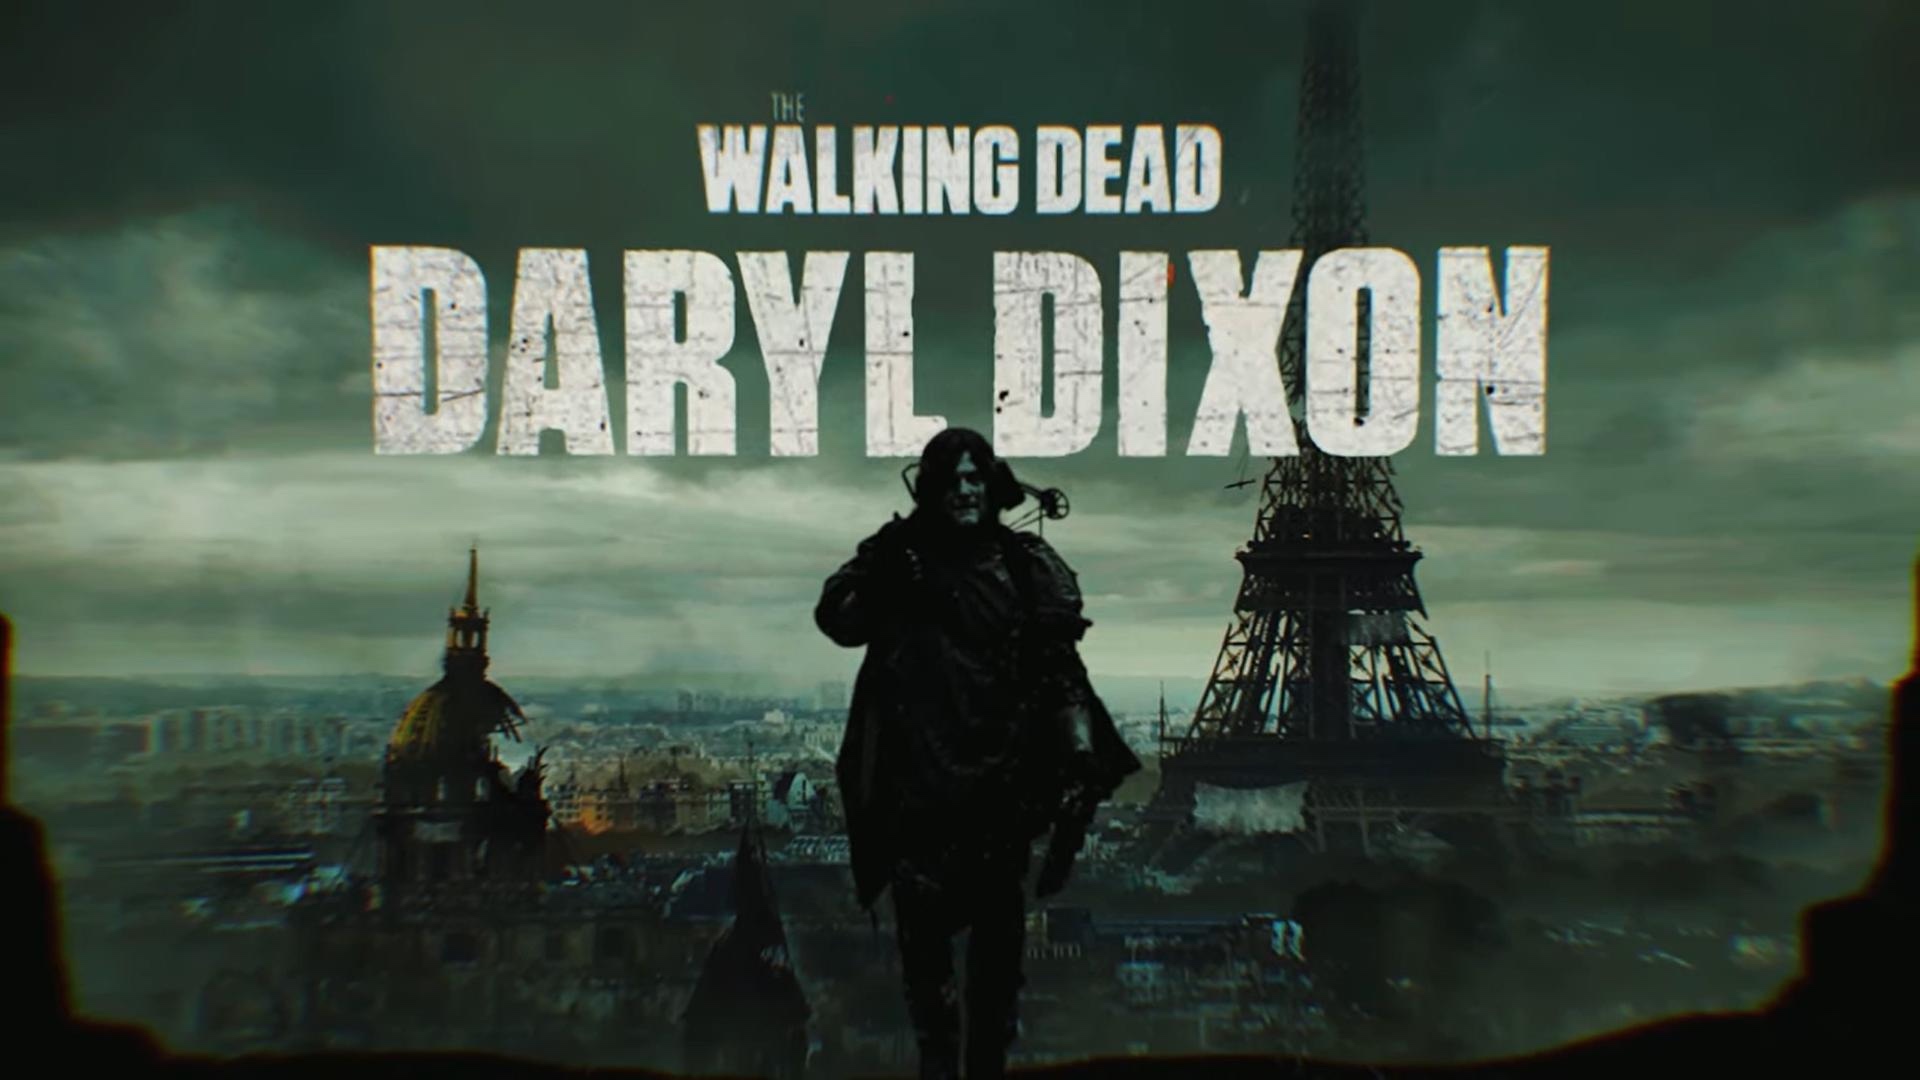 Serie Tv The Walking Dead: Daryl Dixon